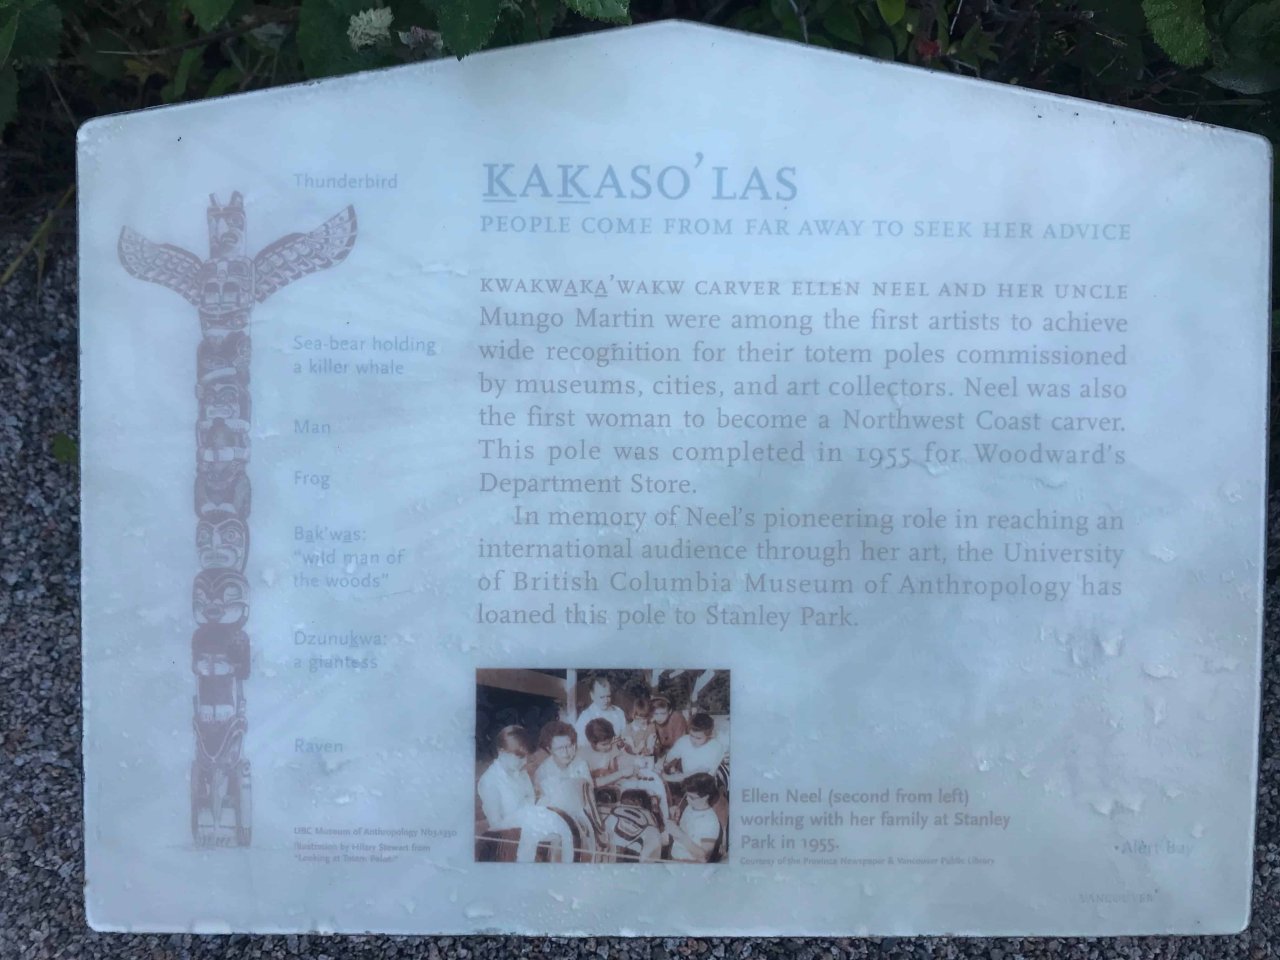 Kakaso'Las Totem Plaque
Source: VHF Files, Jessica Quan